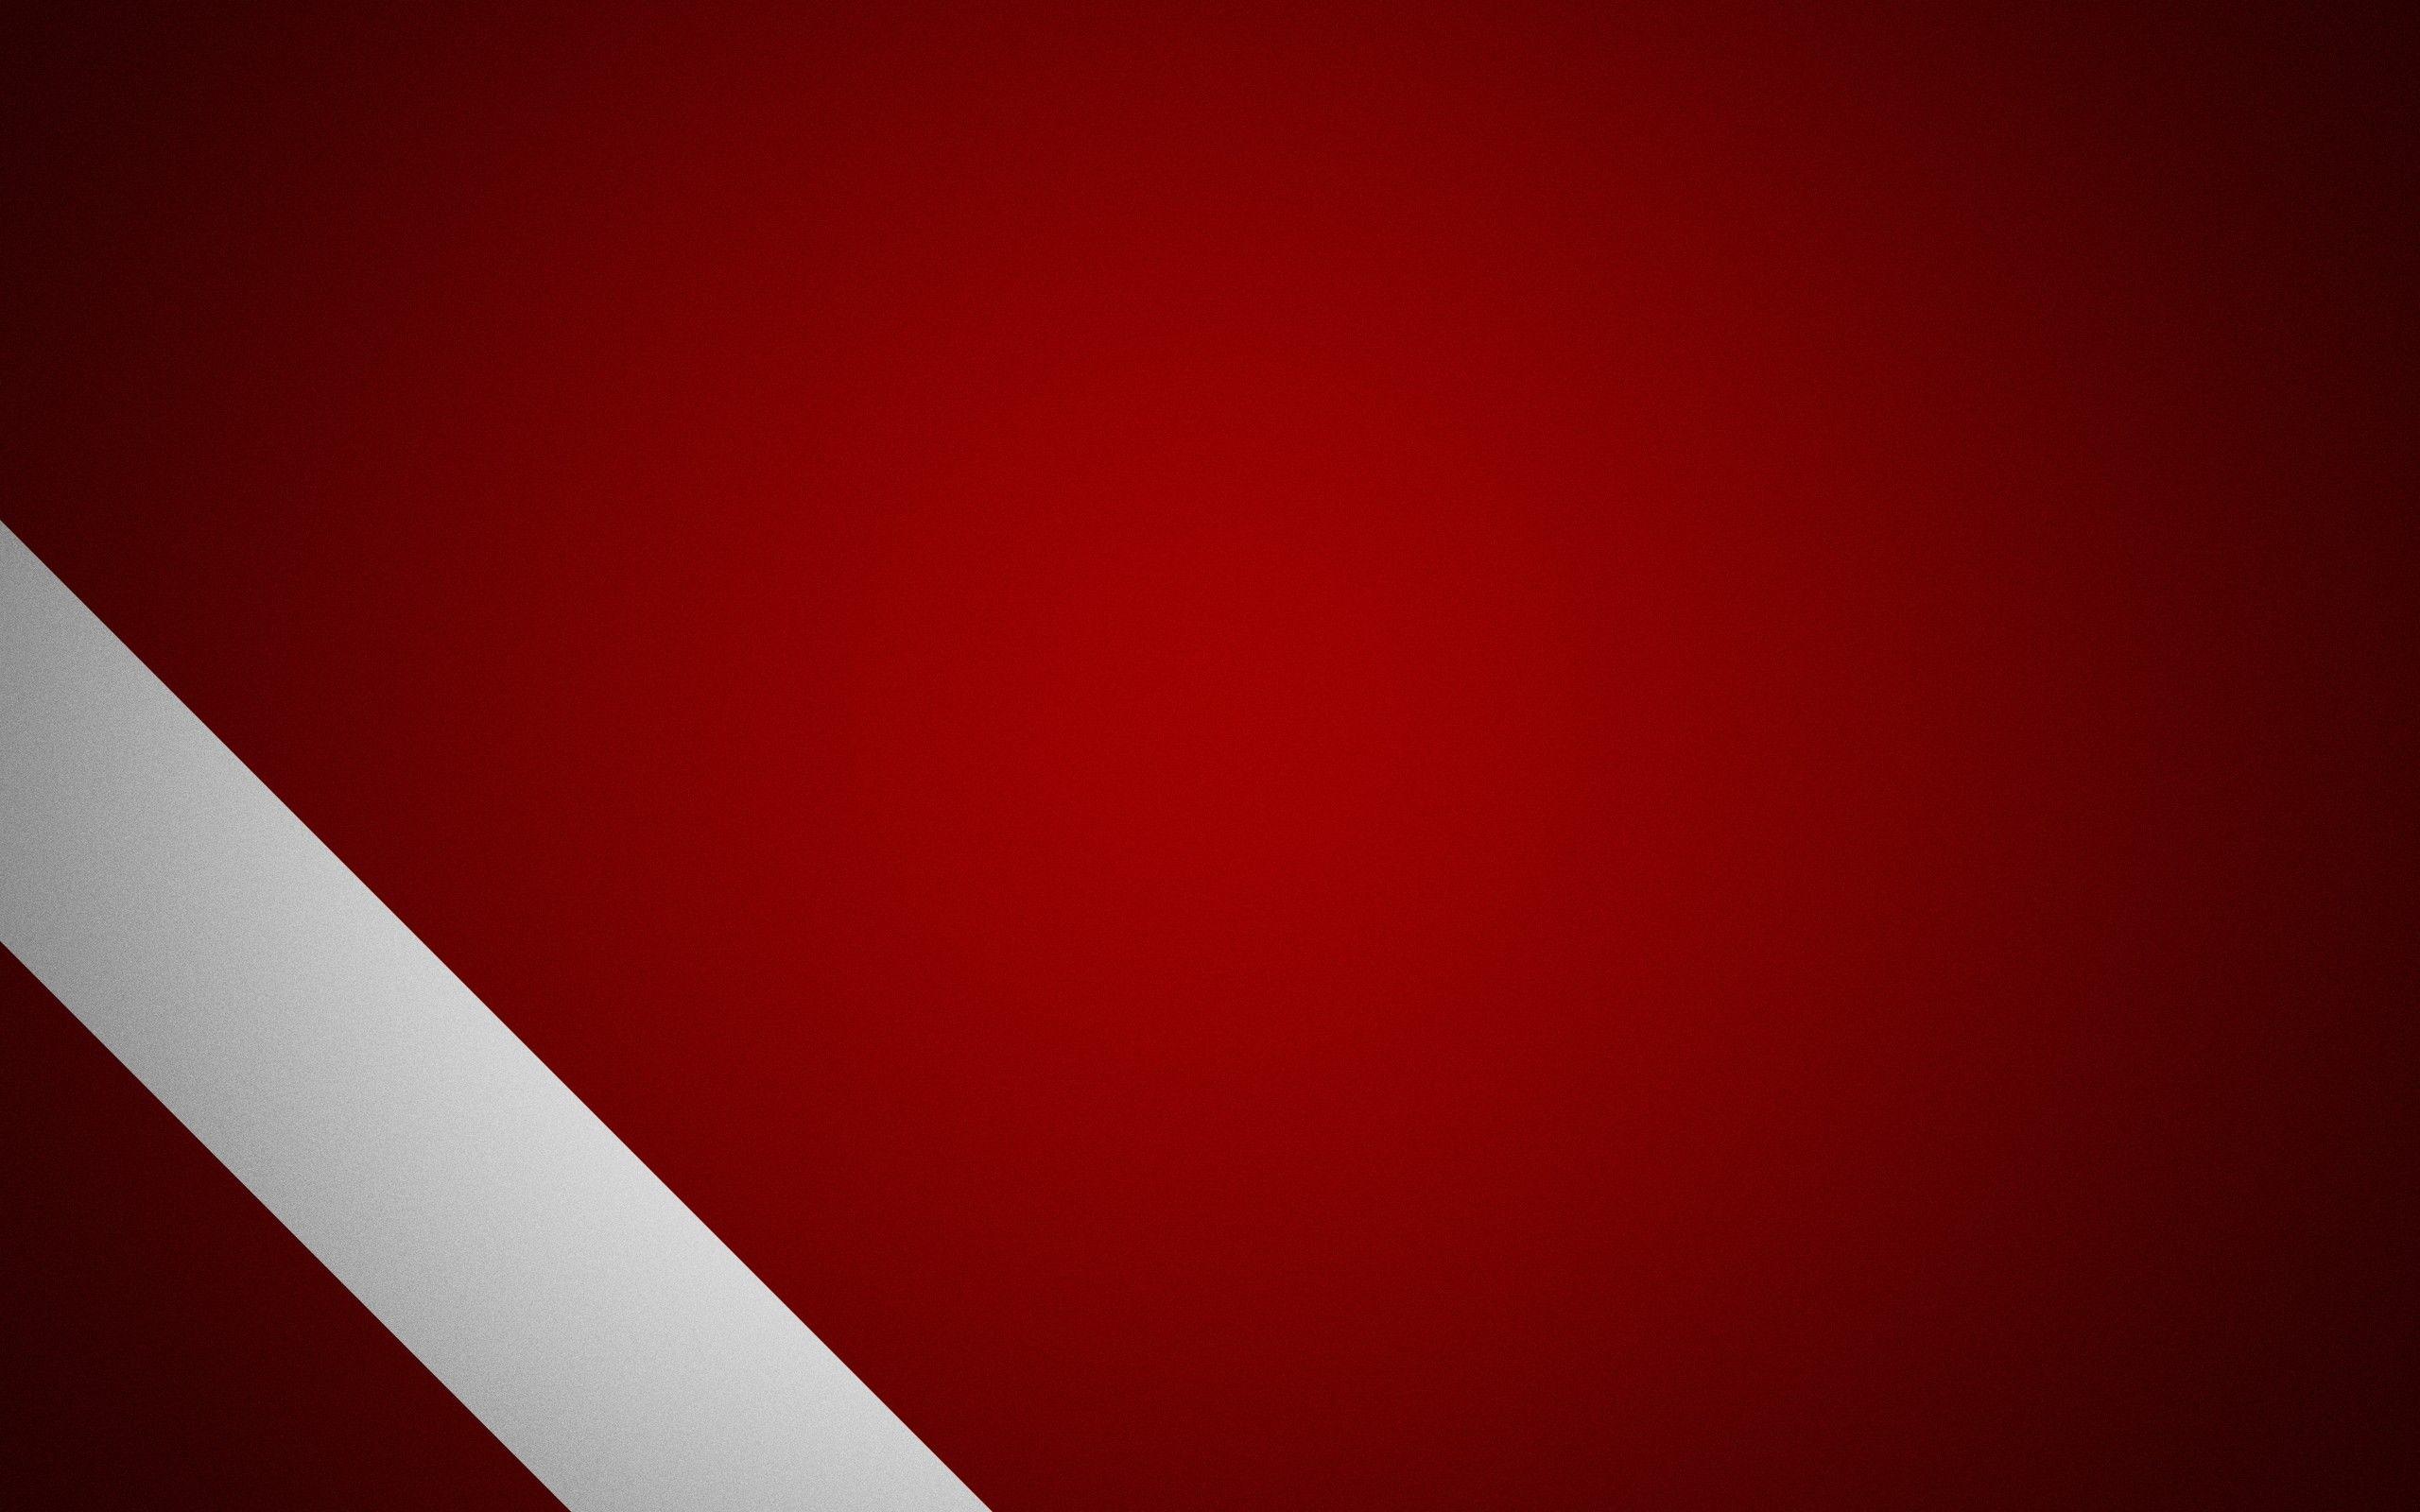 50 Red and White Wallpaper Designs  WallpaperSafari